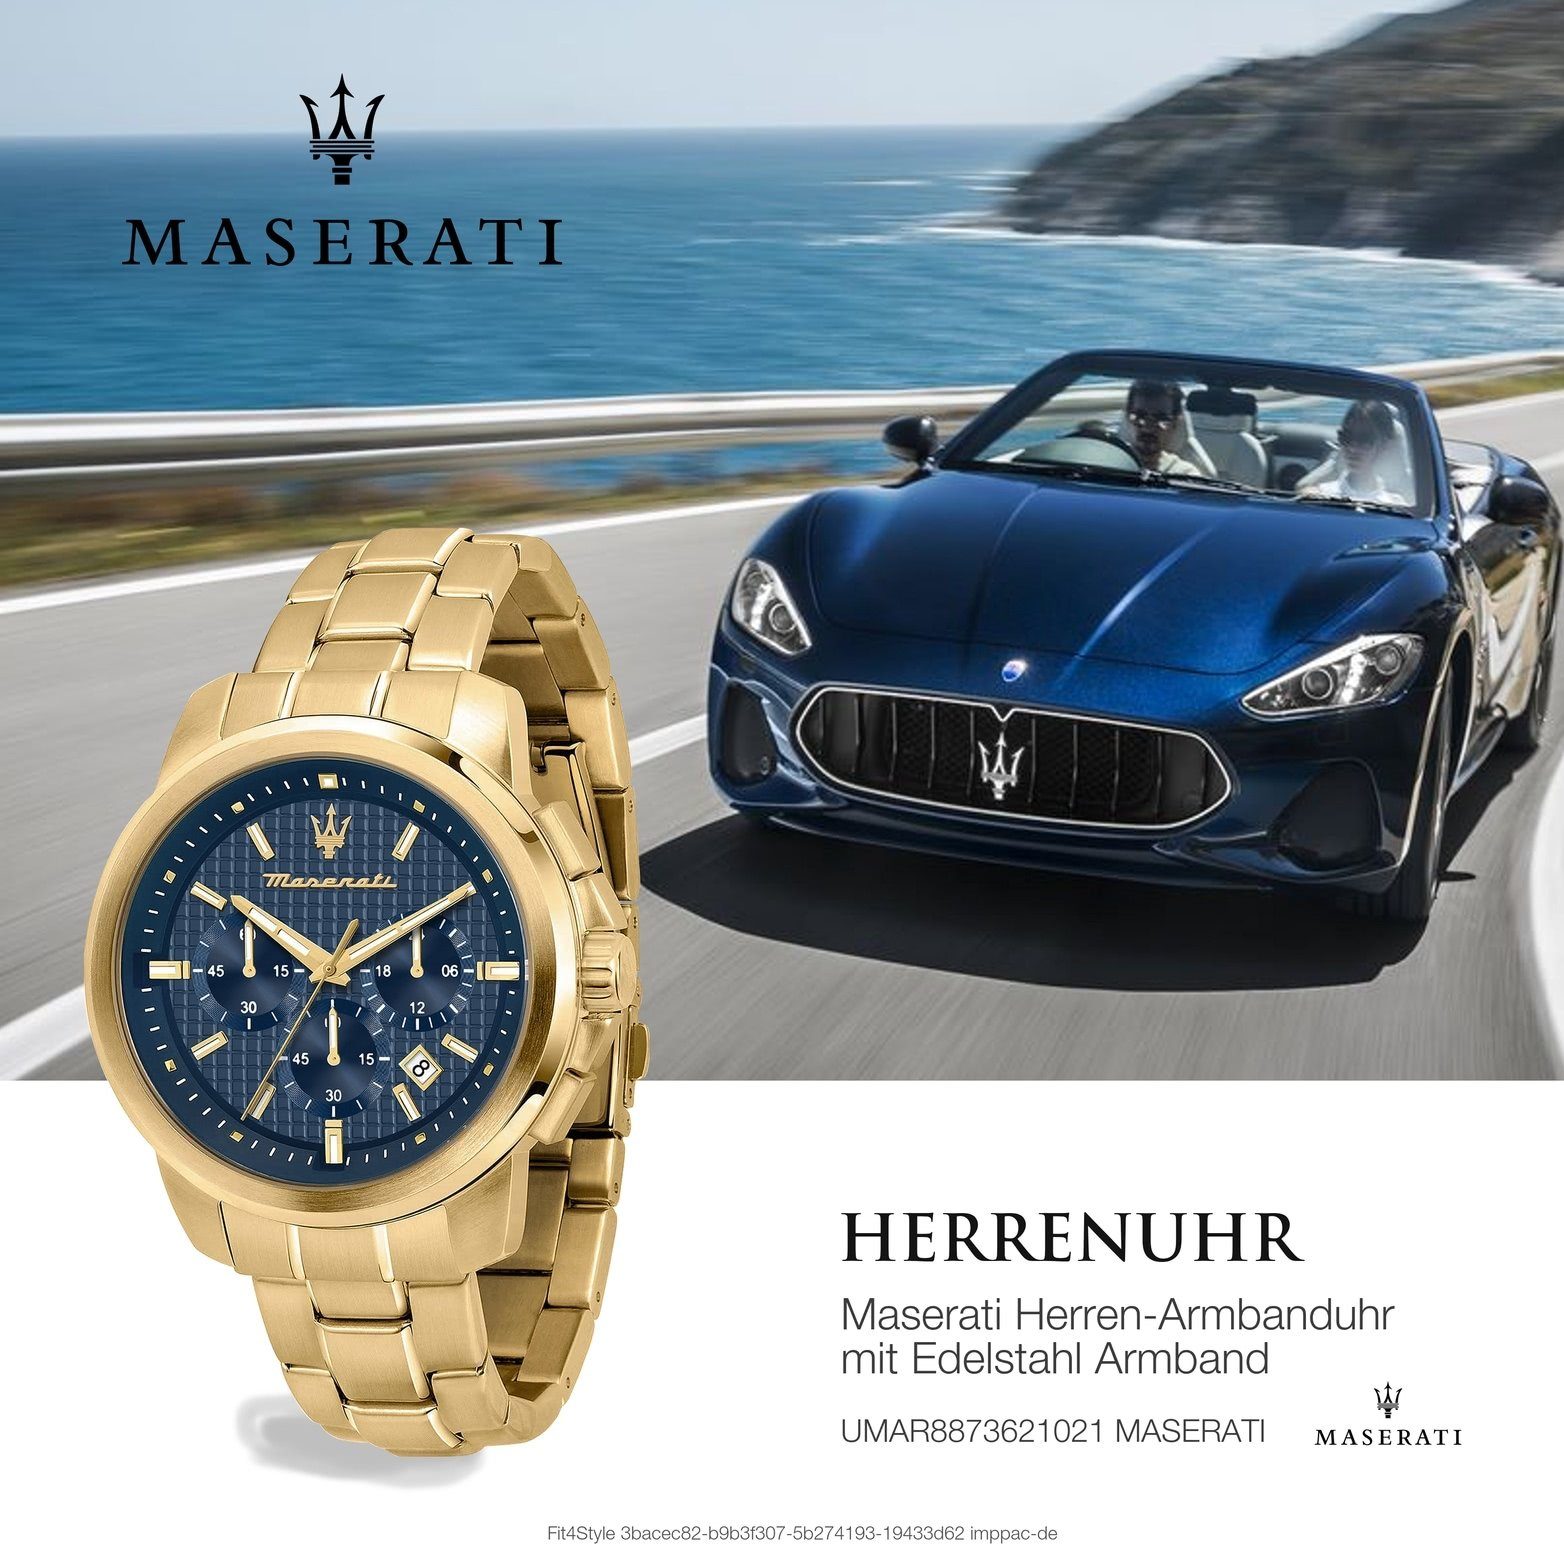 MASERATI Chronograph Maserati Edelstahl blau Edelstahlarmband, 44mm) Herrenuhr (ca. Armband-Uhr, rundes Gehäuse, groß